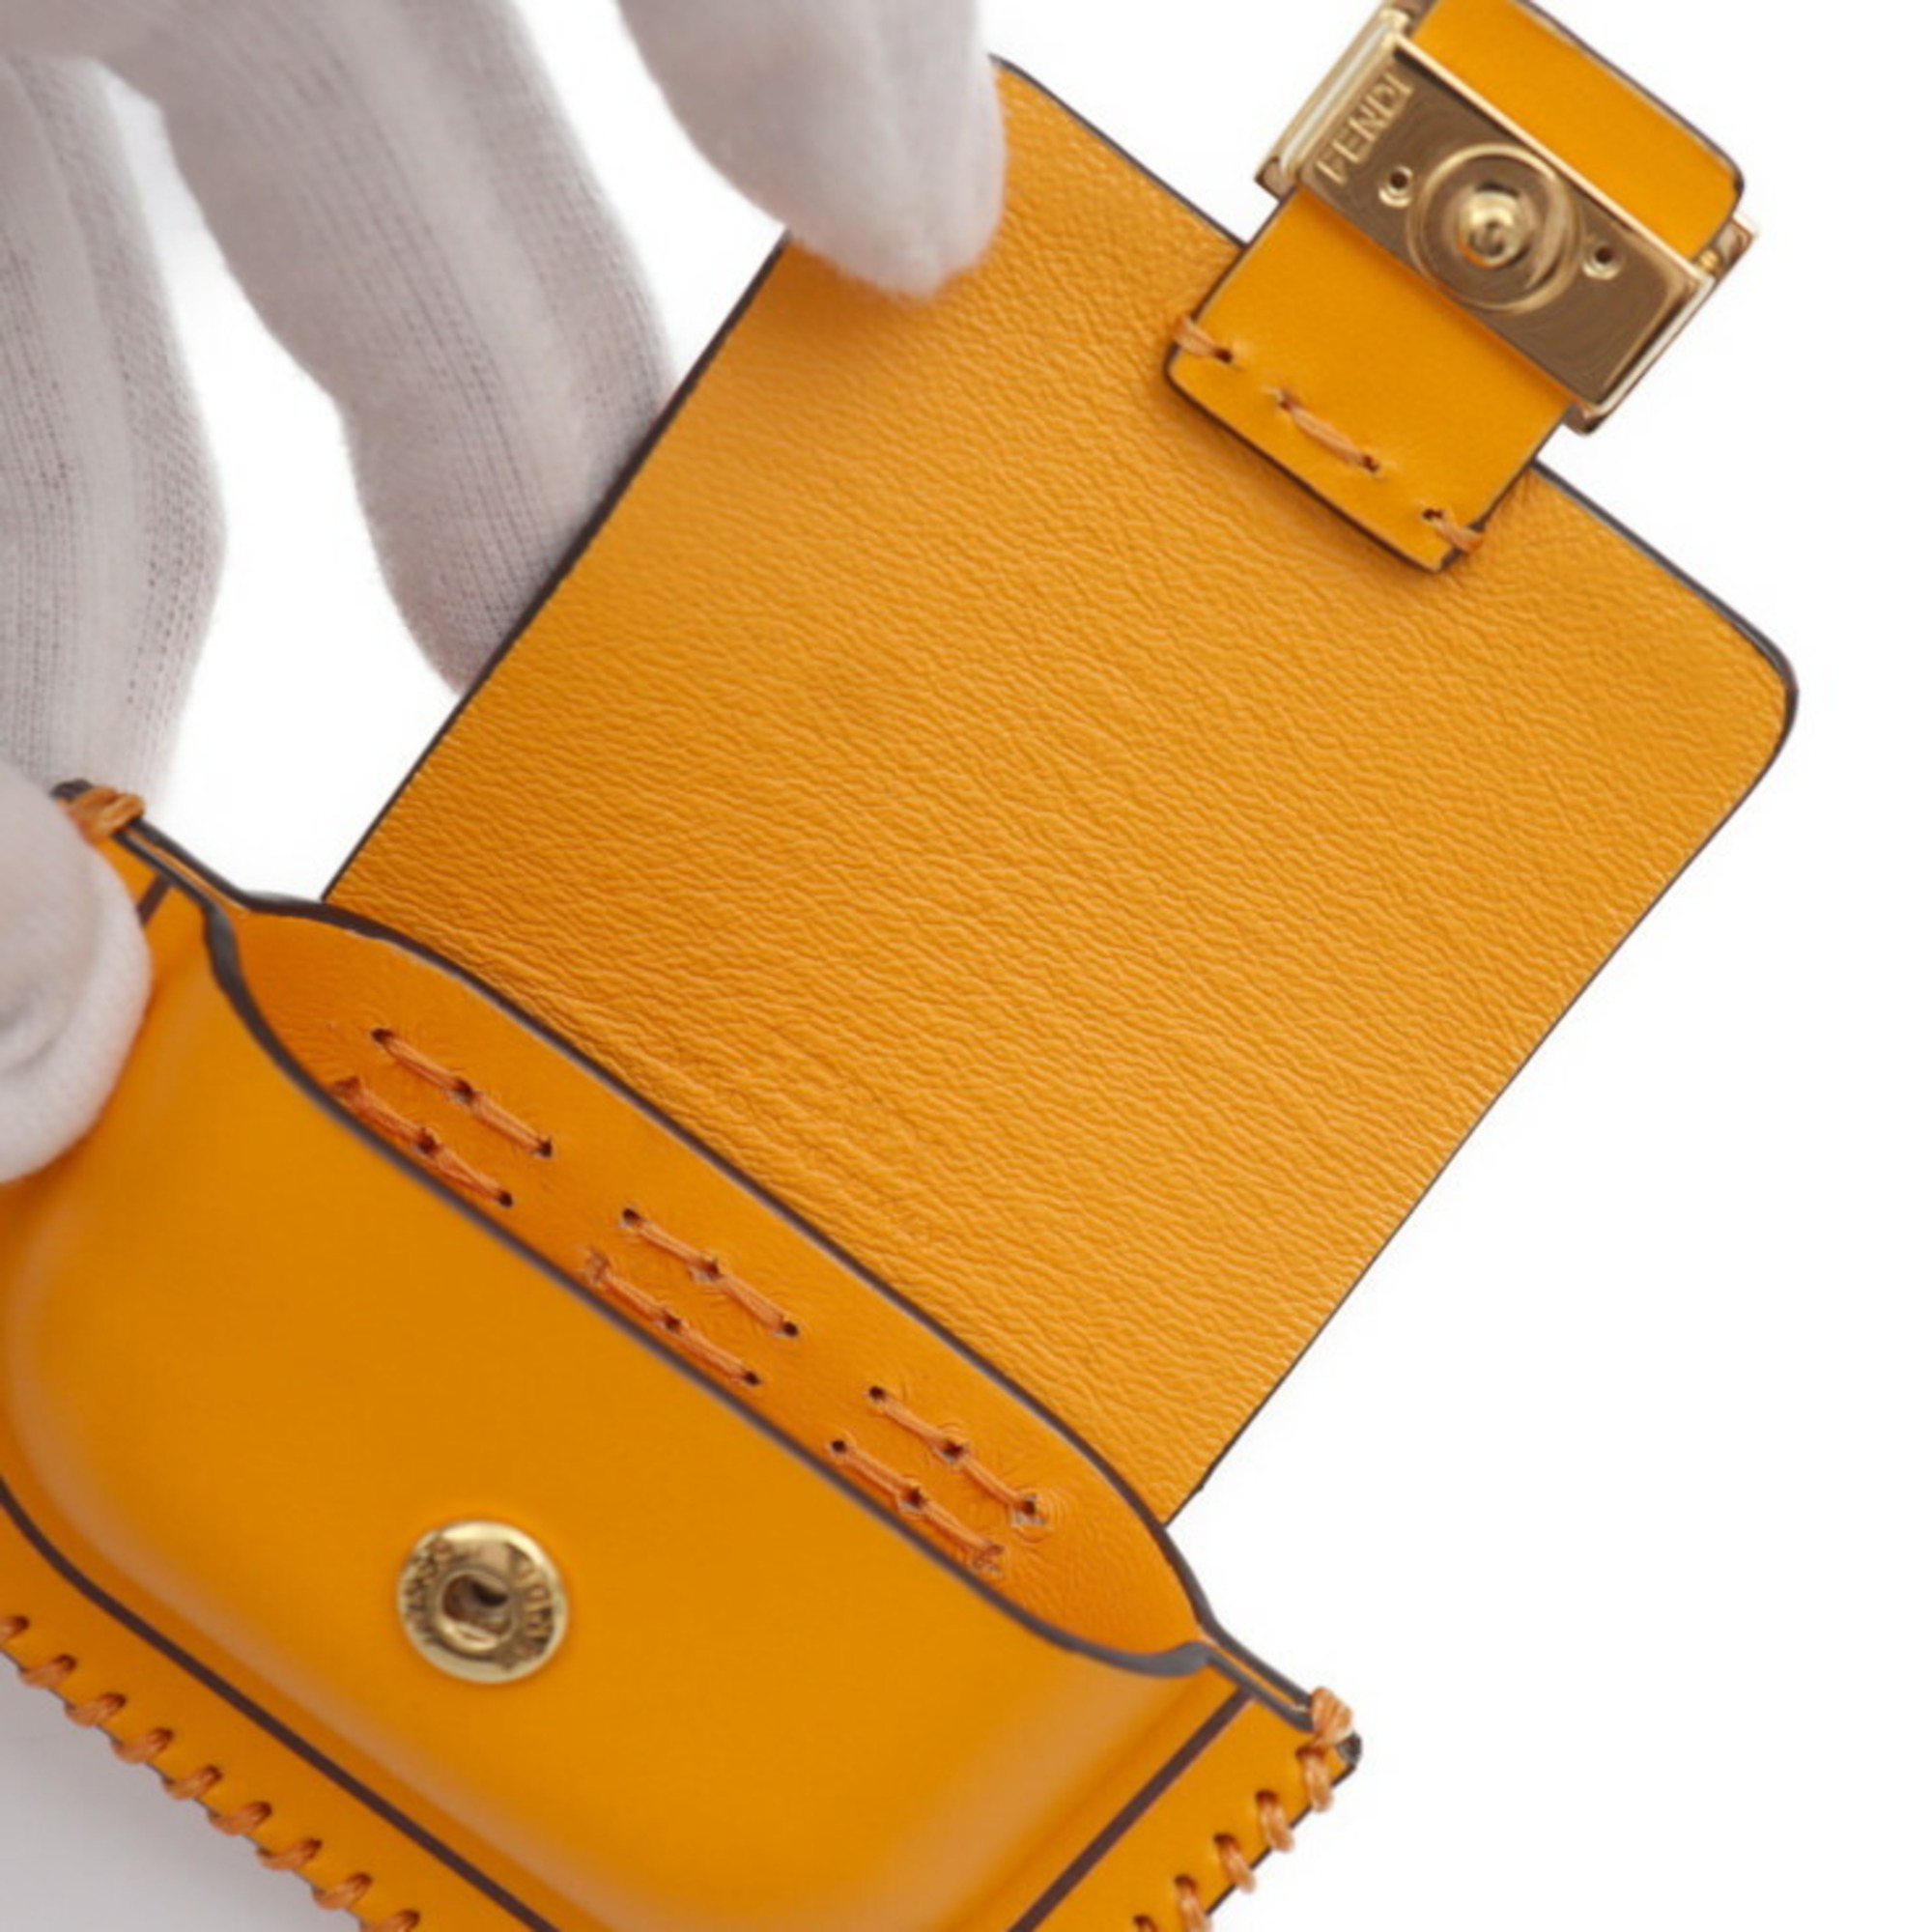 FENDI Fendi Pico Baguette Bag Pouch 7AR946 Calf Leather Orange Gold Hardware Earphone Case AirPods Holder